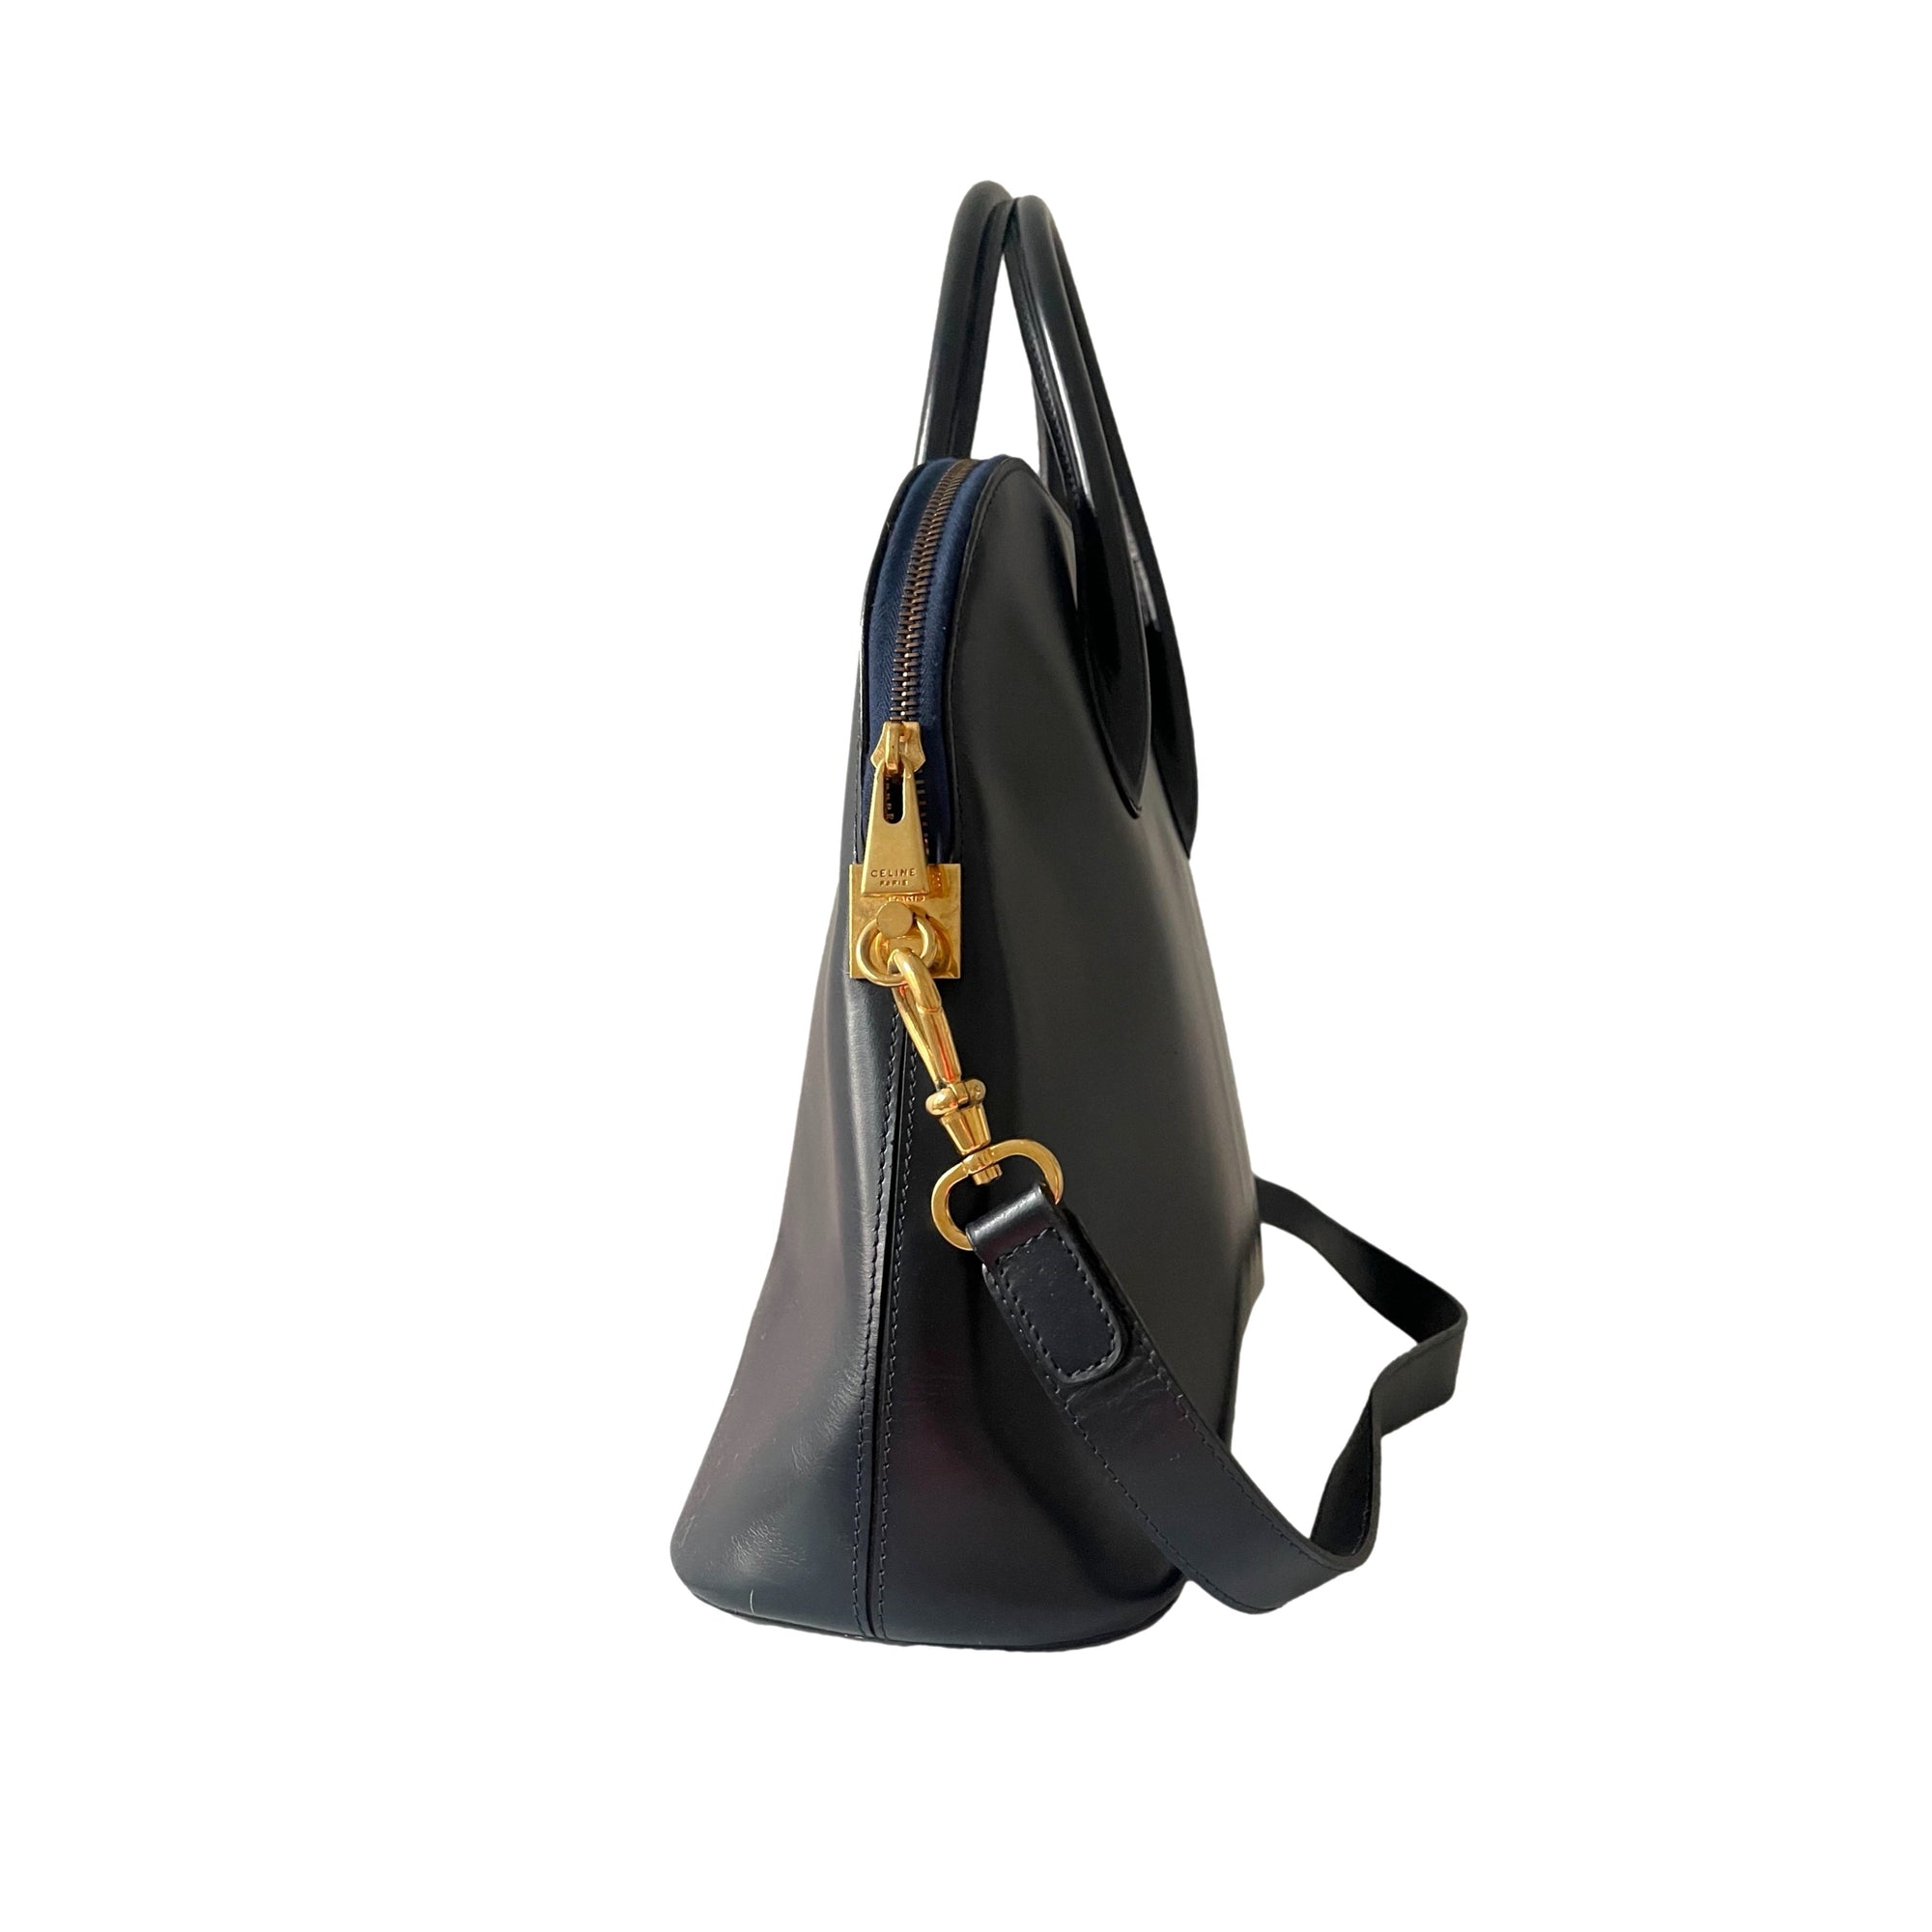 Celine Navy Leather 2way Bag - Handbags